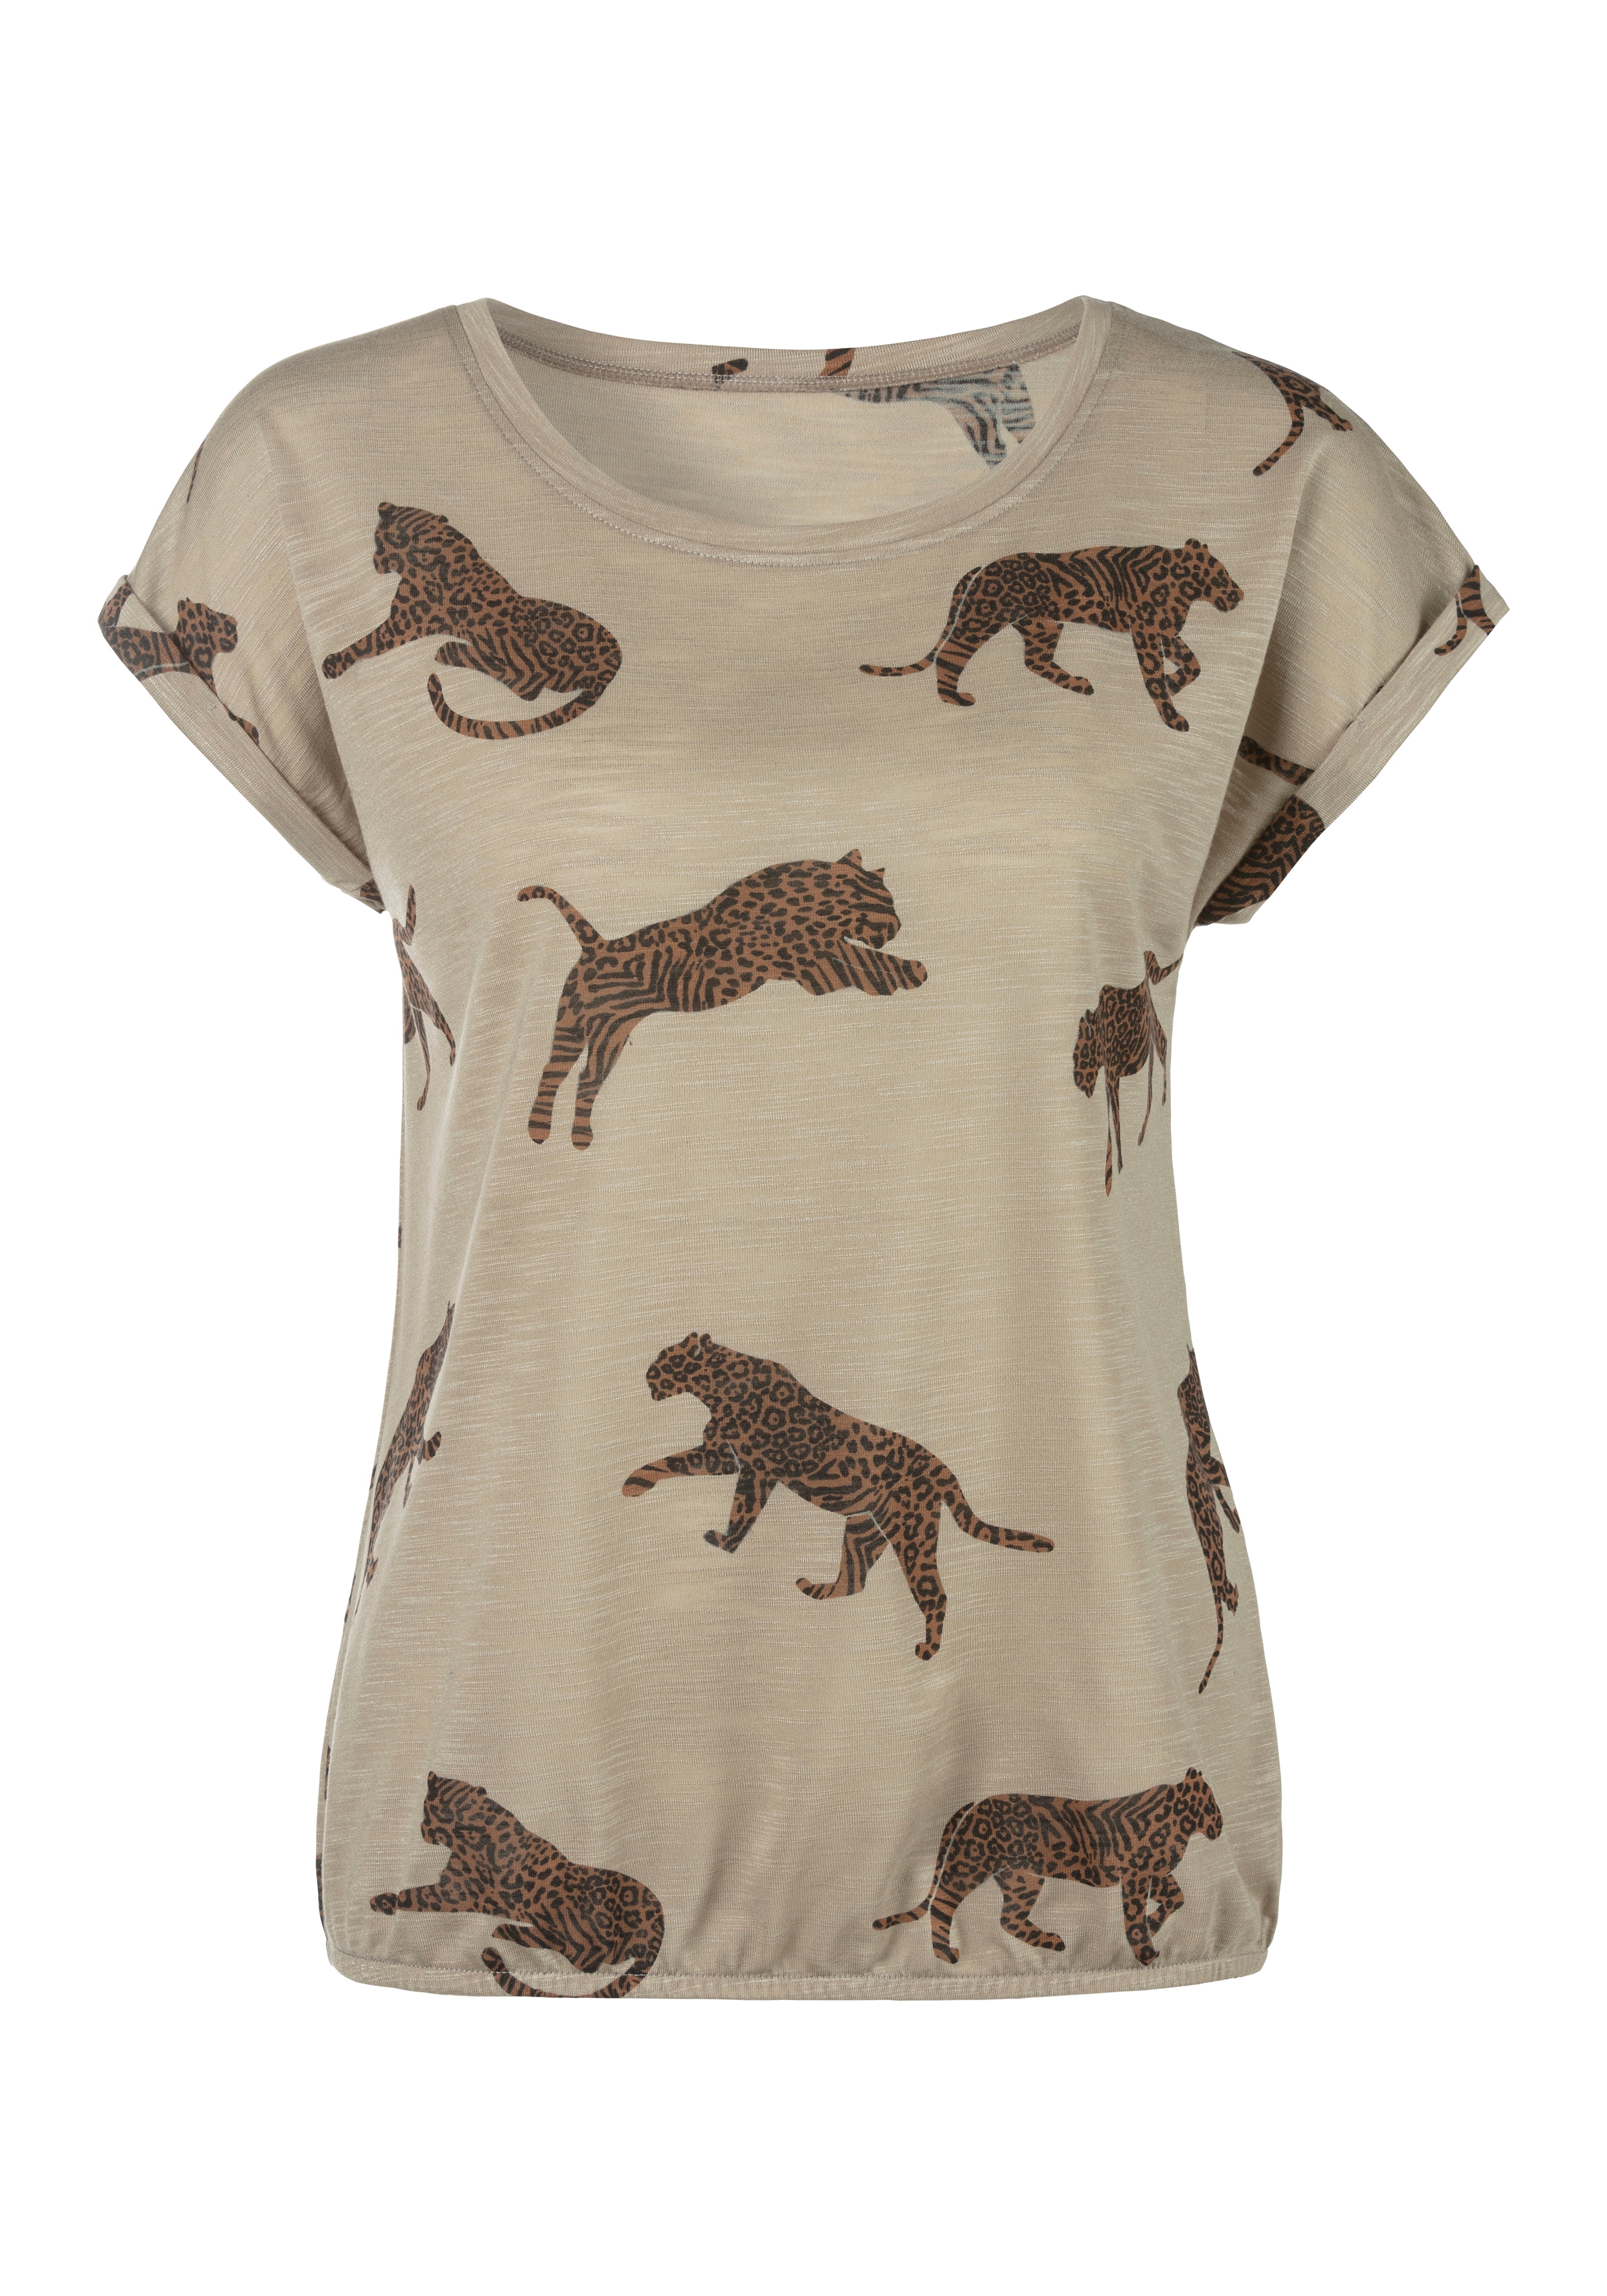 LASCANA Kurzarmshirt, mit Leoparden-Motiv, Damen T-Shirt, lockere Passform,  casual-chic » LASCANA | Bademode, Unterwäsche & Lingerie online kaufen